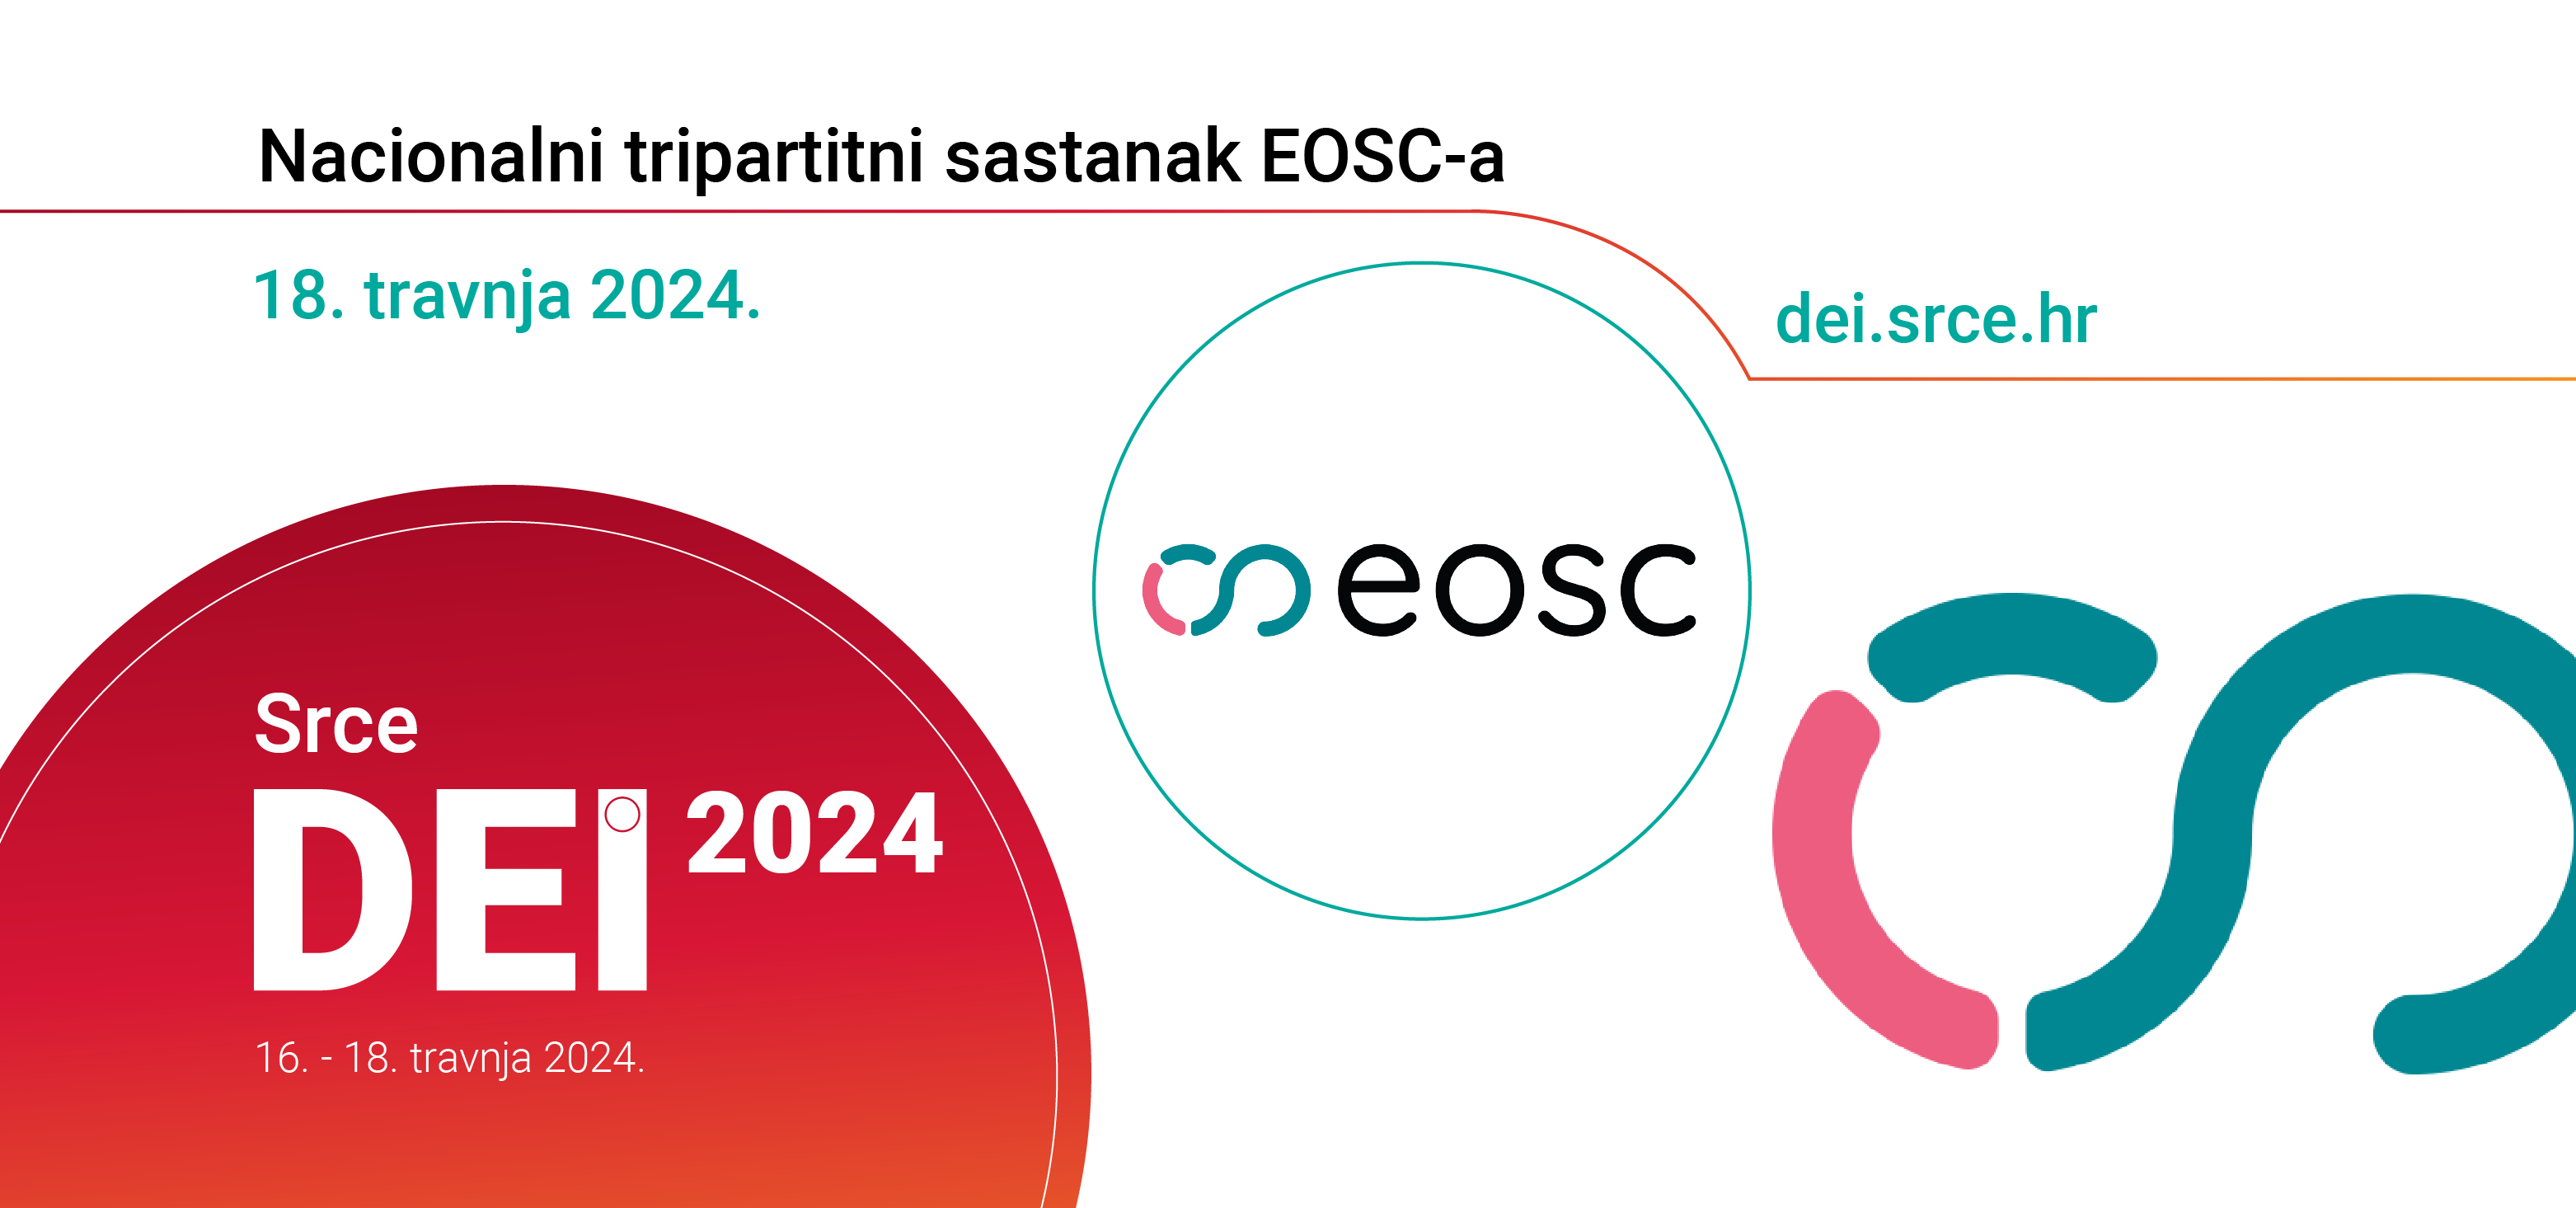 Srce DEI 2024: Drugi nacionalni tripartitni sastanak EOSC-a